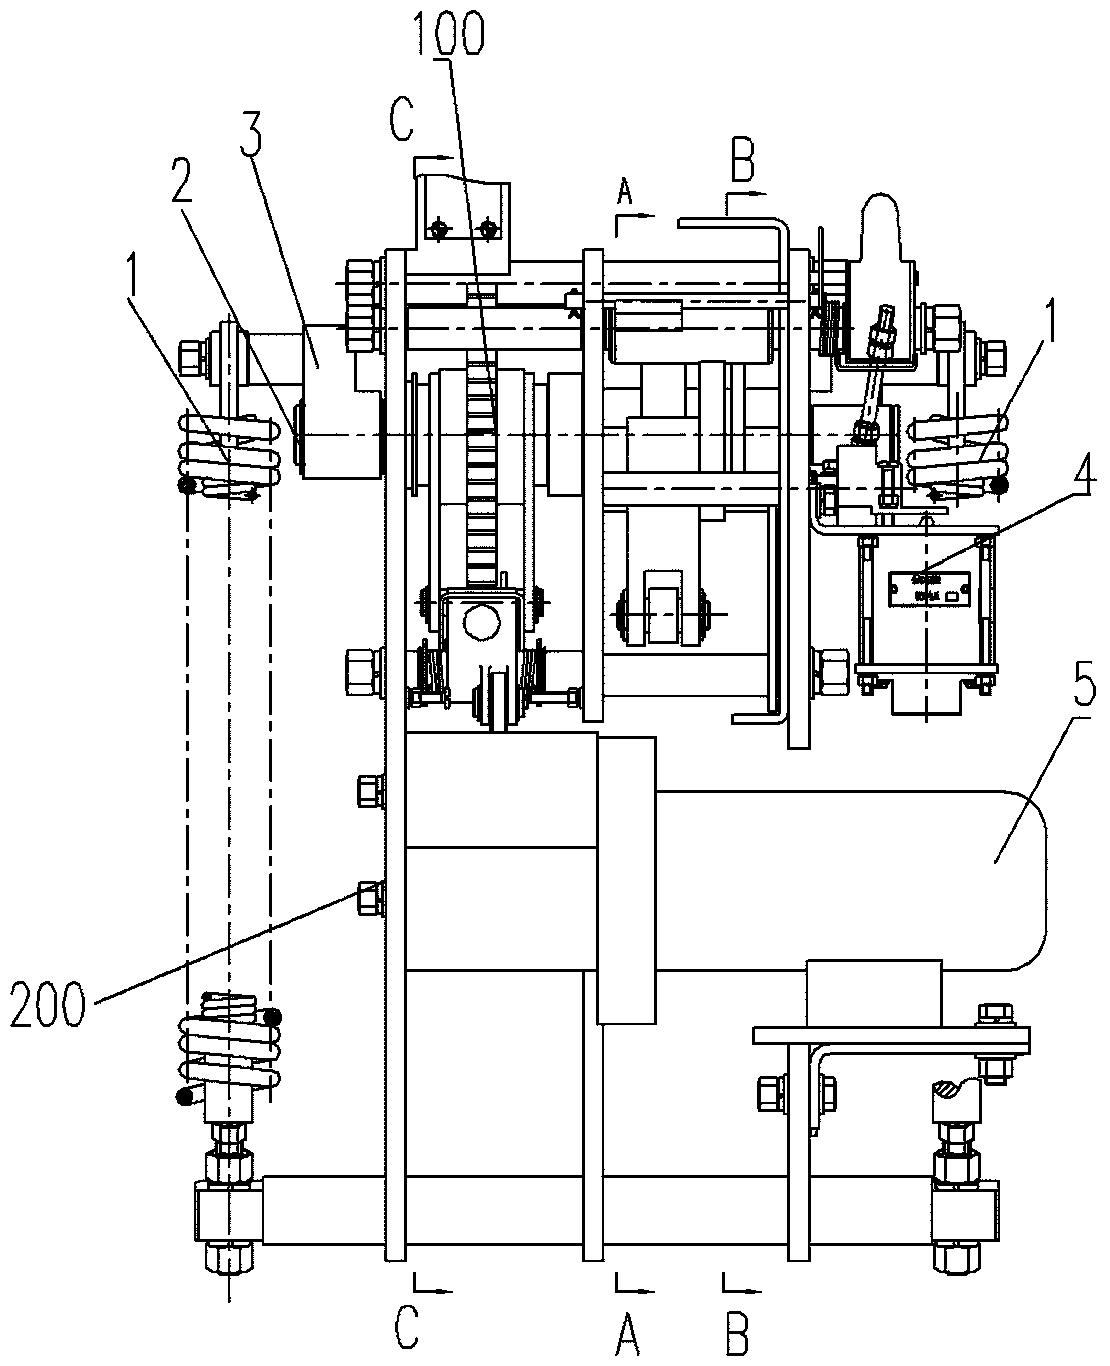 A circuit breaker spring operating mechanism